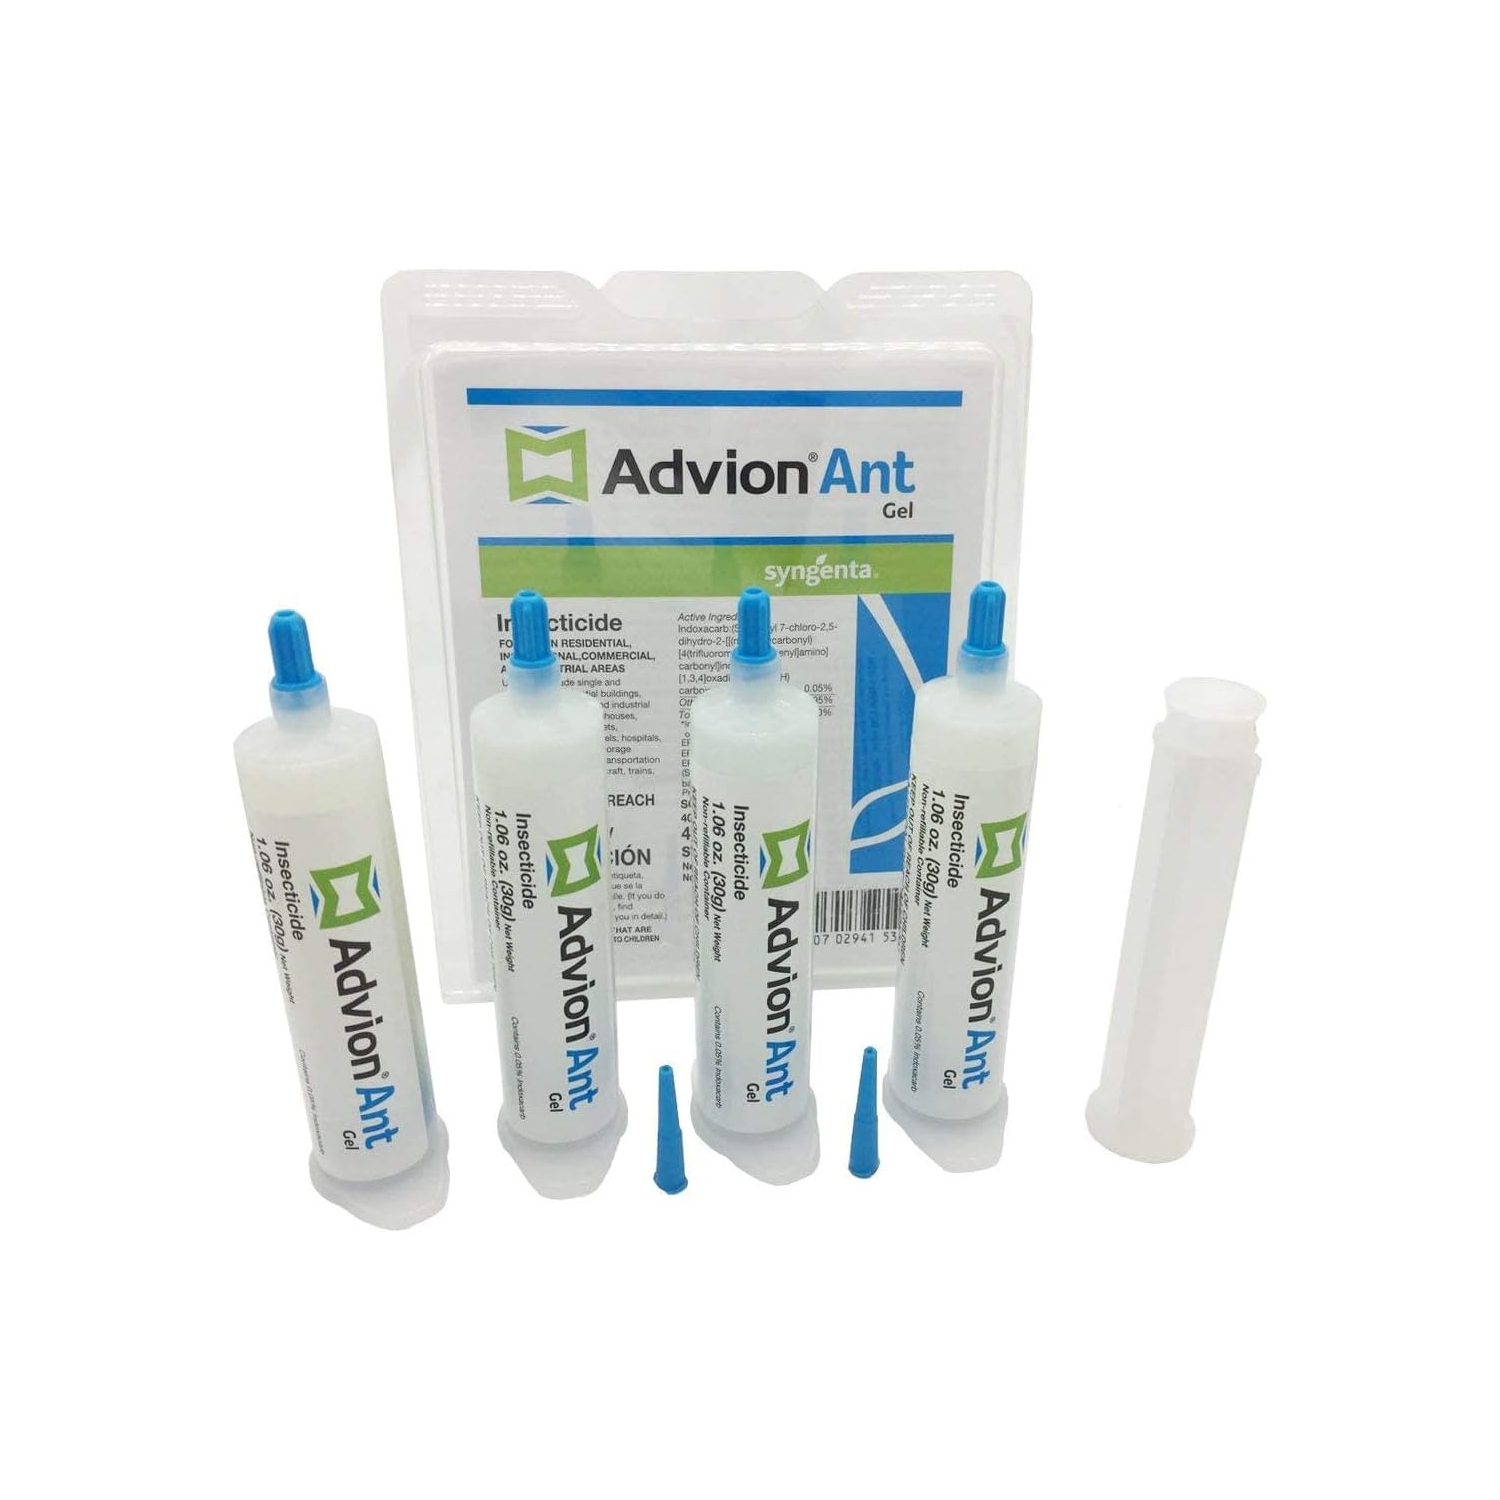 Advion ANT Gel Bait Pest Control by Syngenta - 1 Box (4 Tubes X 30 gram syringes) - Works best for ANTS